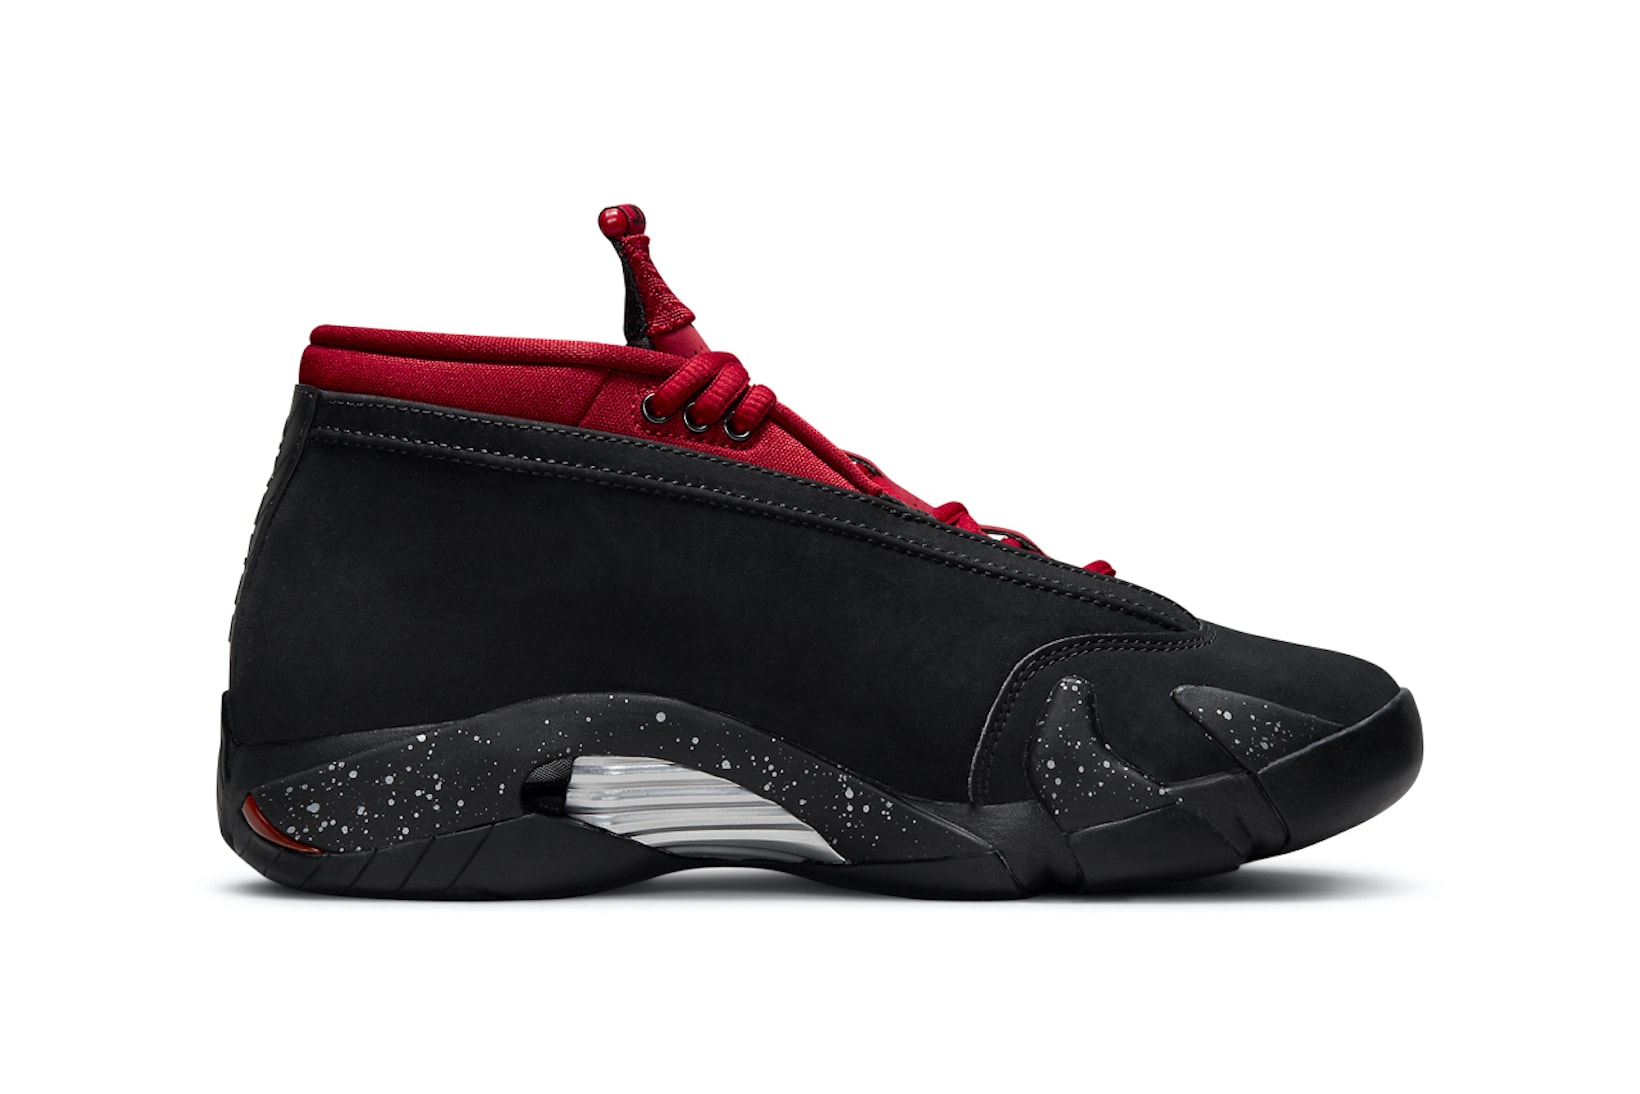 Nike Womens Air Jordan 14 AJ14 Low Red Lipstick Black Sneakers Footwear Kicks Sneakerhead Shoes Lateral